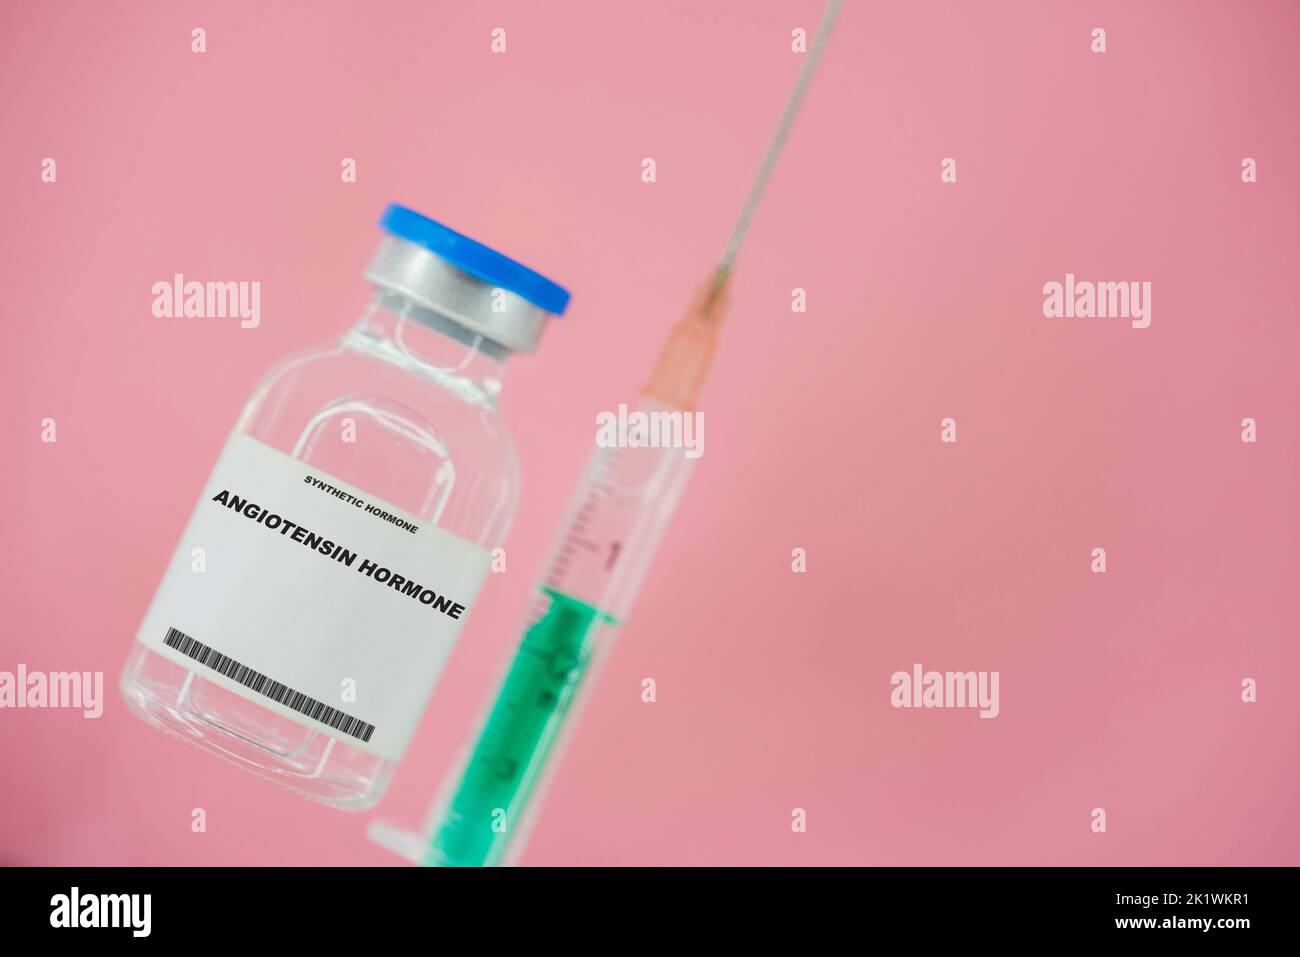 Angiotensin hormone, conceptual image Stock Photo